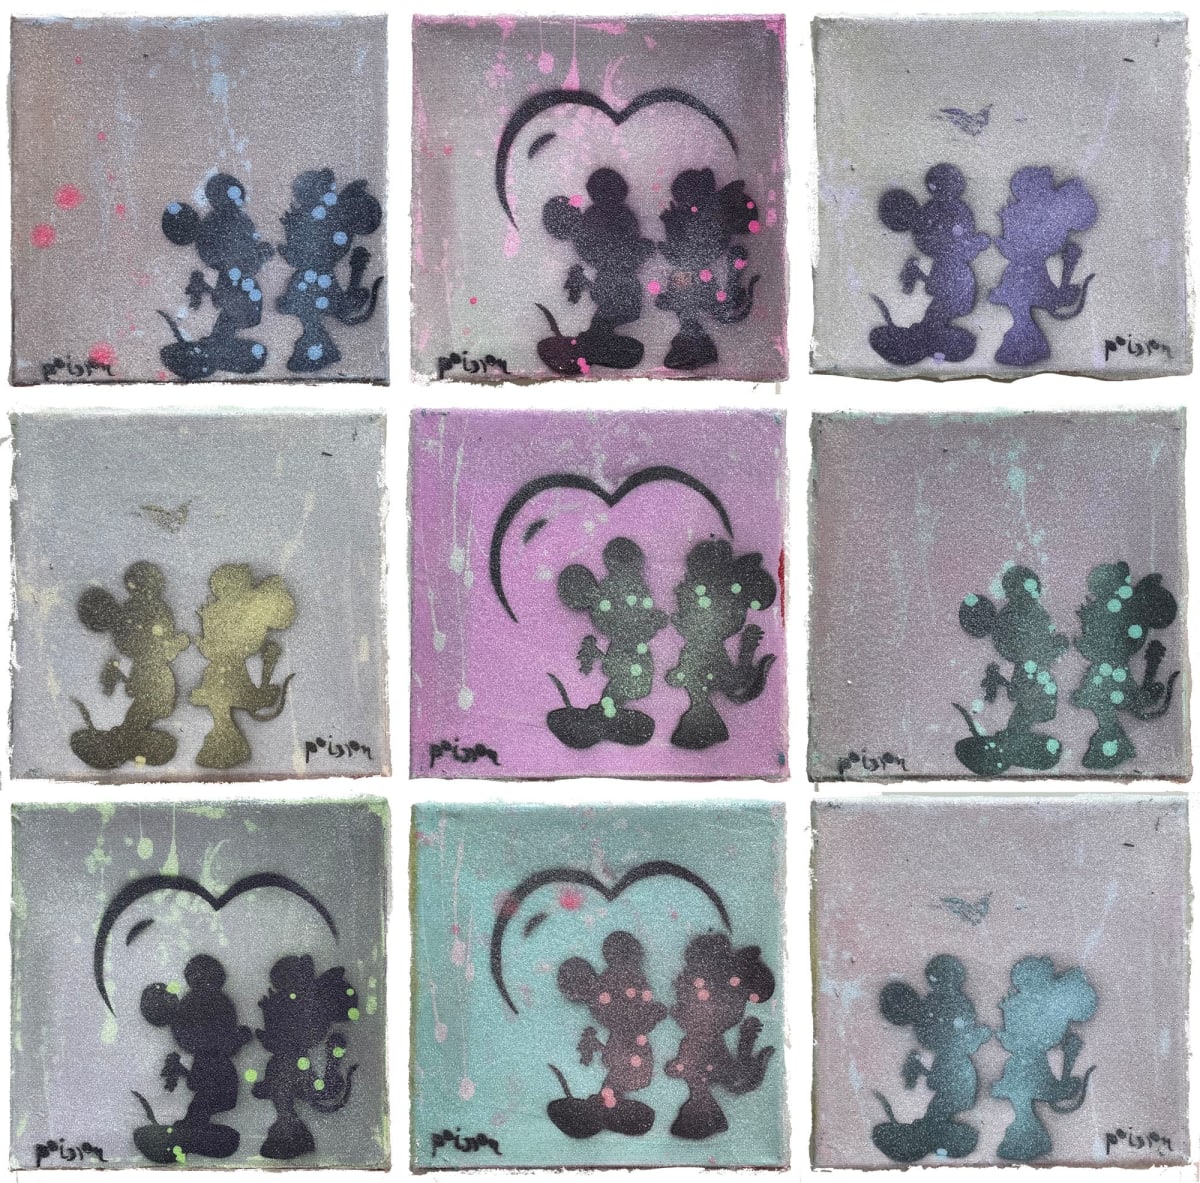 Mickey meets Minnie_ beads minis by Tina Psoinos  Image: Mickey meets Minnie (beads) set of 9